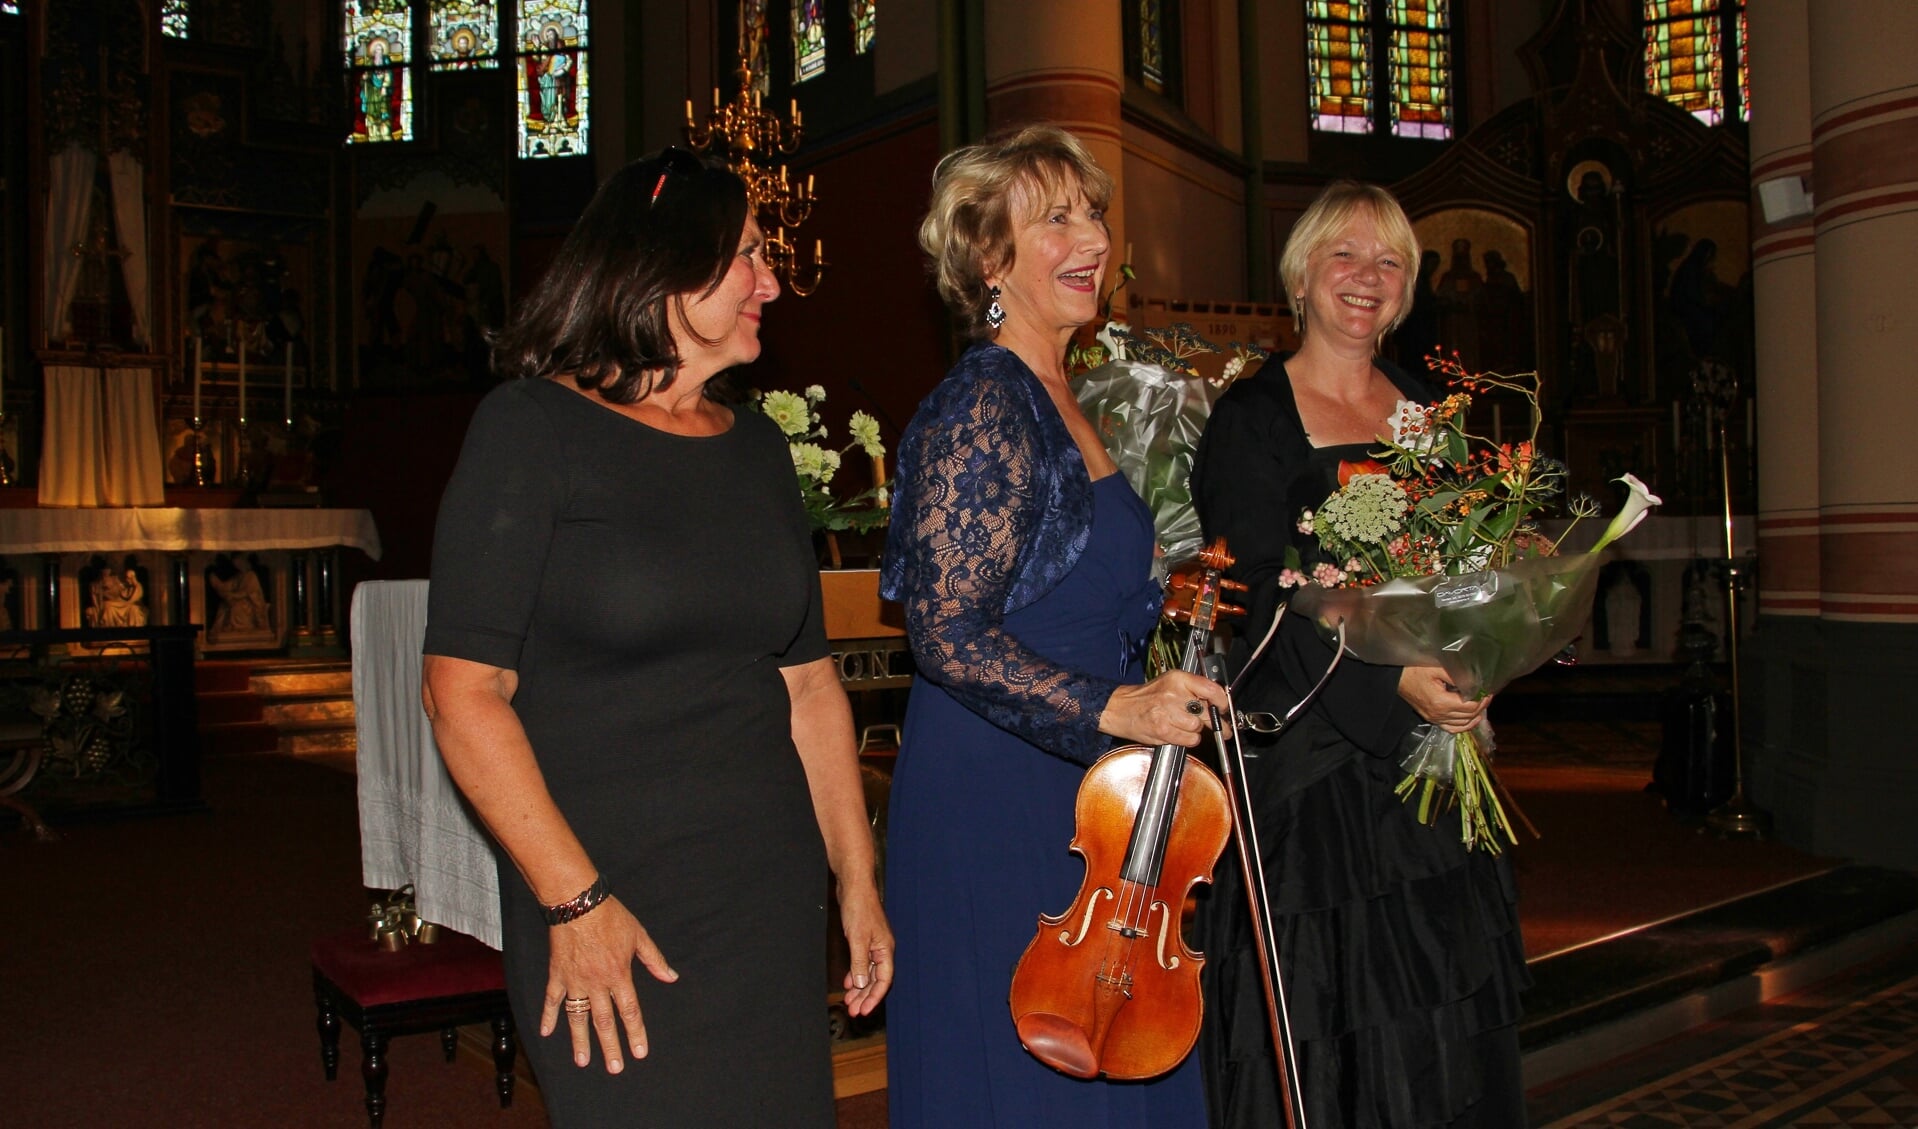 Anne van der Vliet - Brouwer, Michaela Hollmannová en Diana de Vries na een succesvol concert. Foto: Liesbeth Spaansen